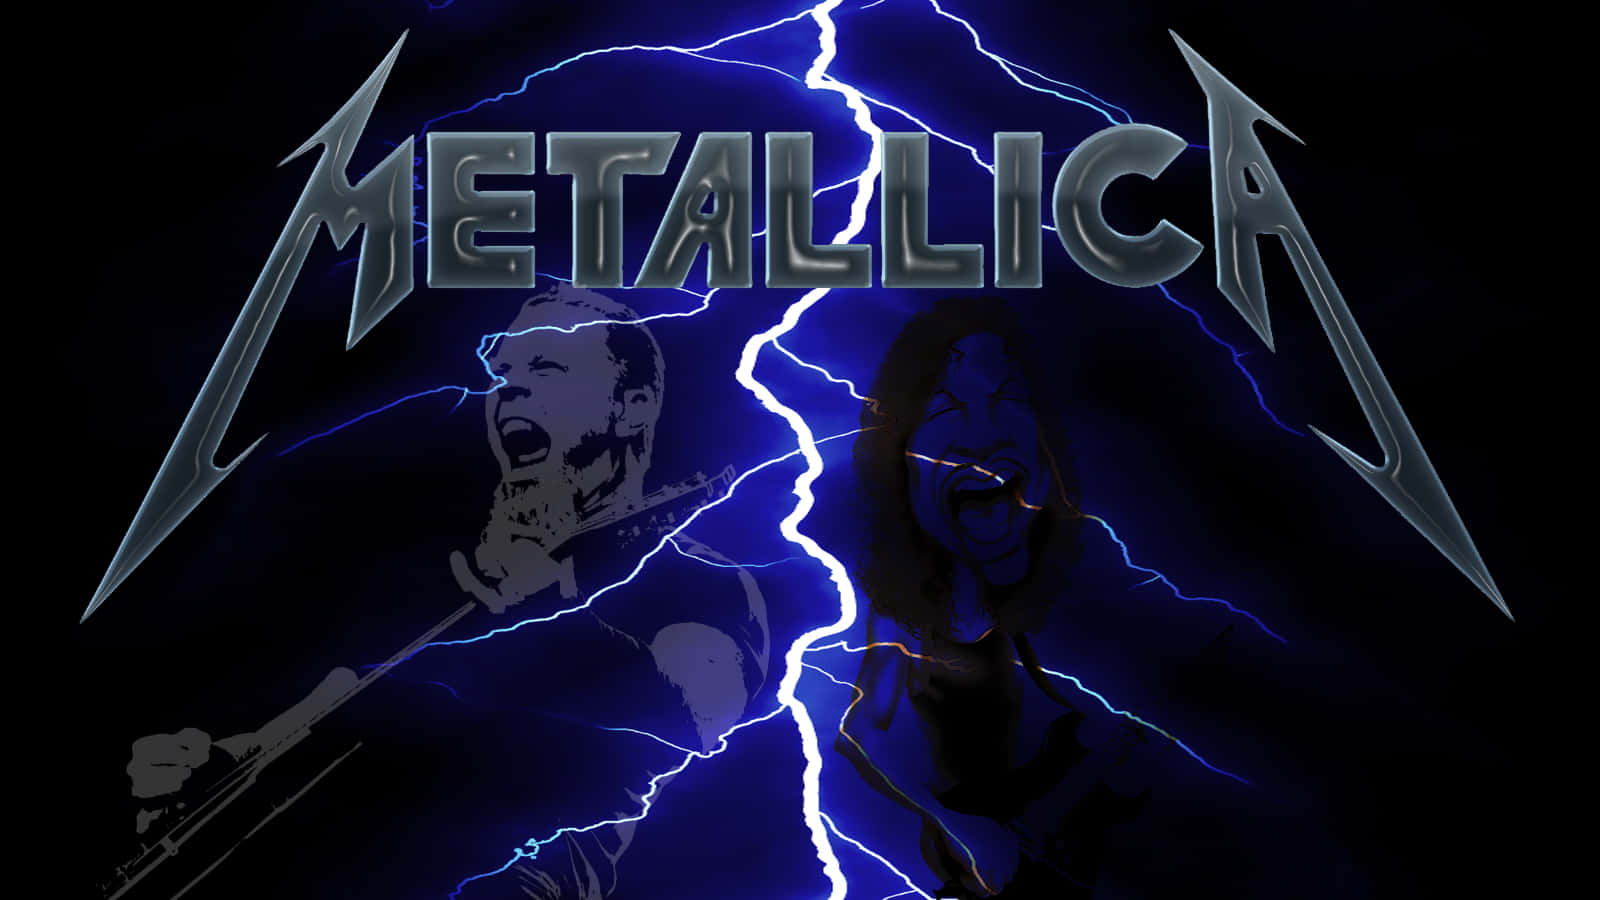 Heavy Metallica [wallpaper] Wallpaper